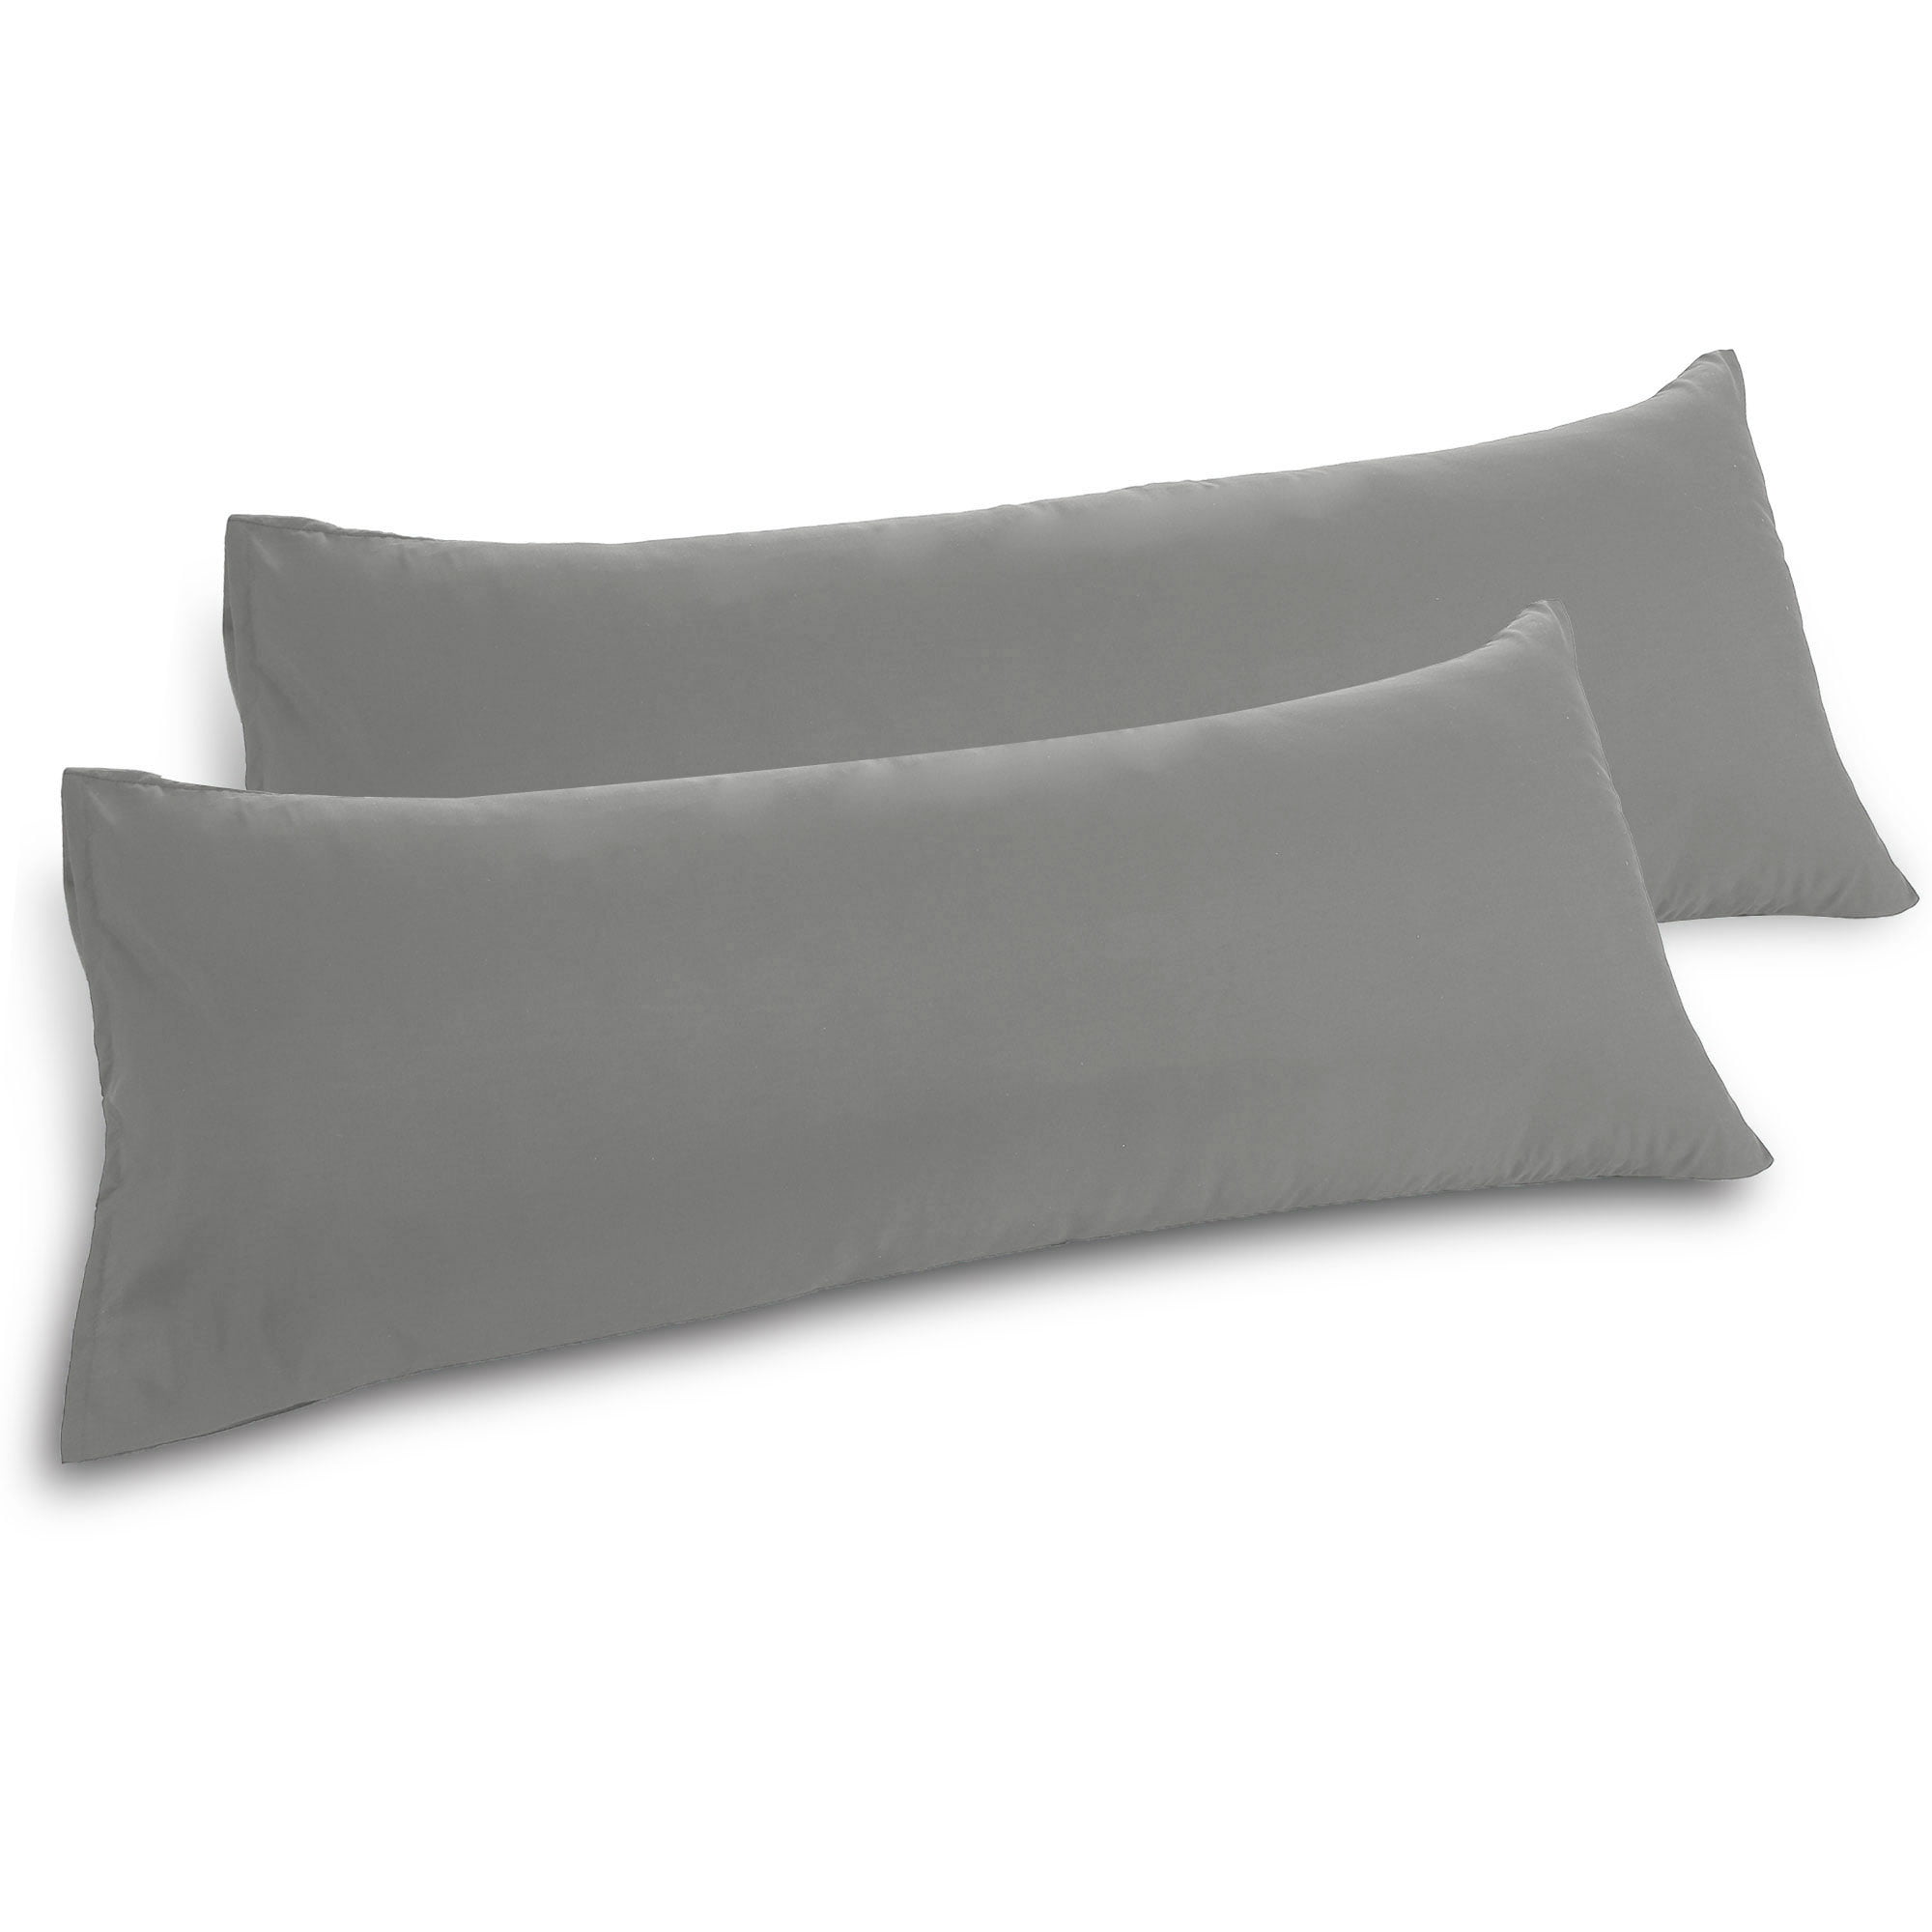 Bolster Pillowcase Soft 1800 Microfiber Body Pillow Cover with Zipper 